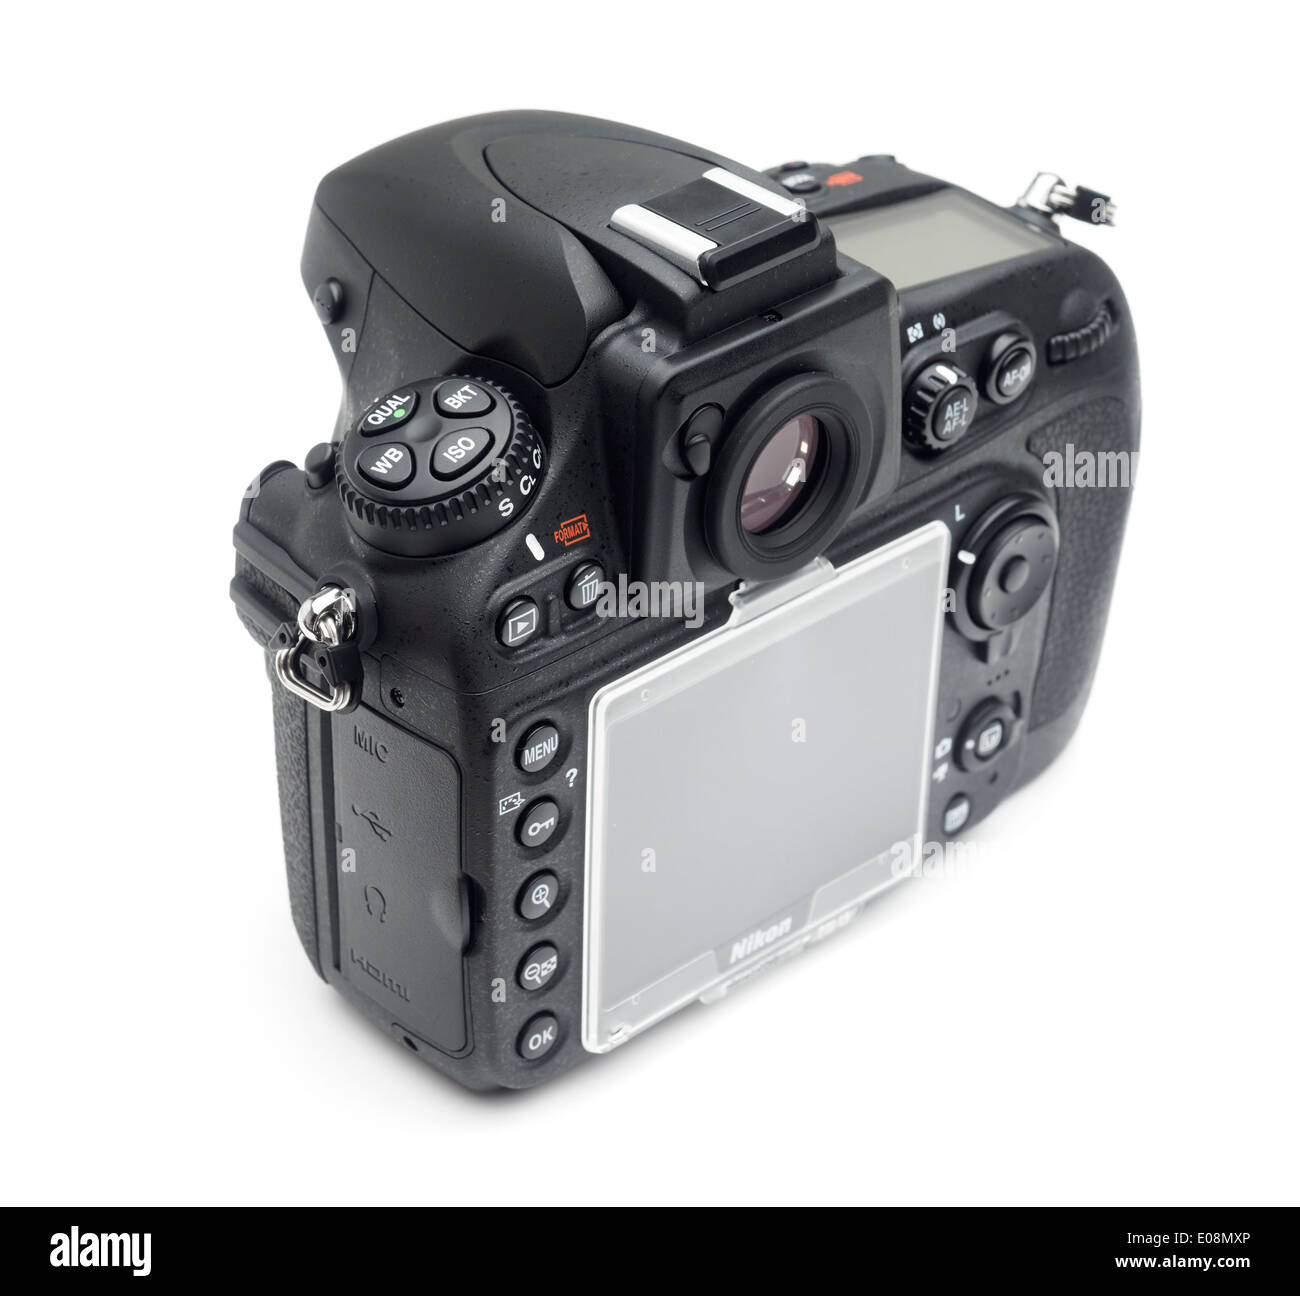 Nikon D800 digital camera cutout on white background Stock Photo